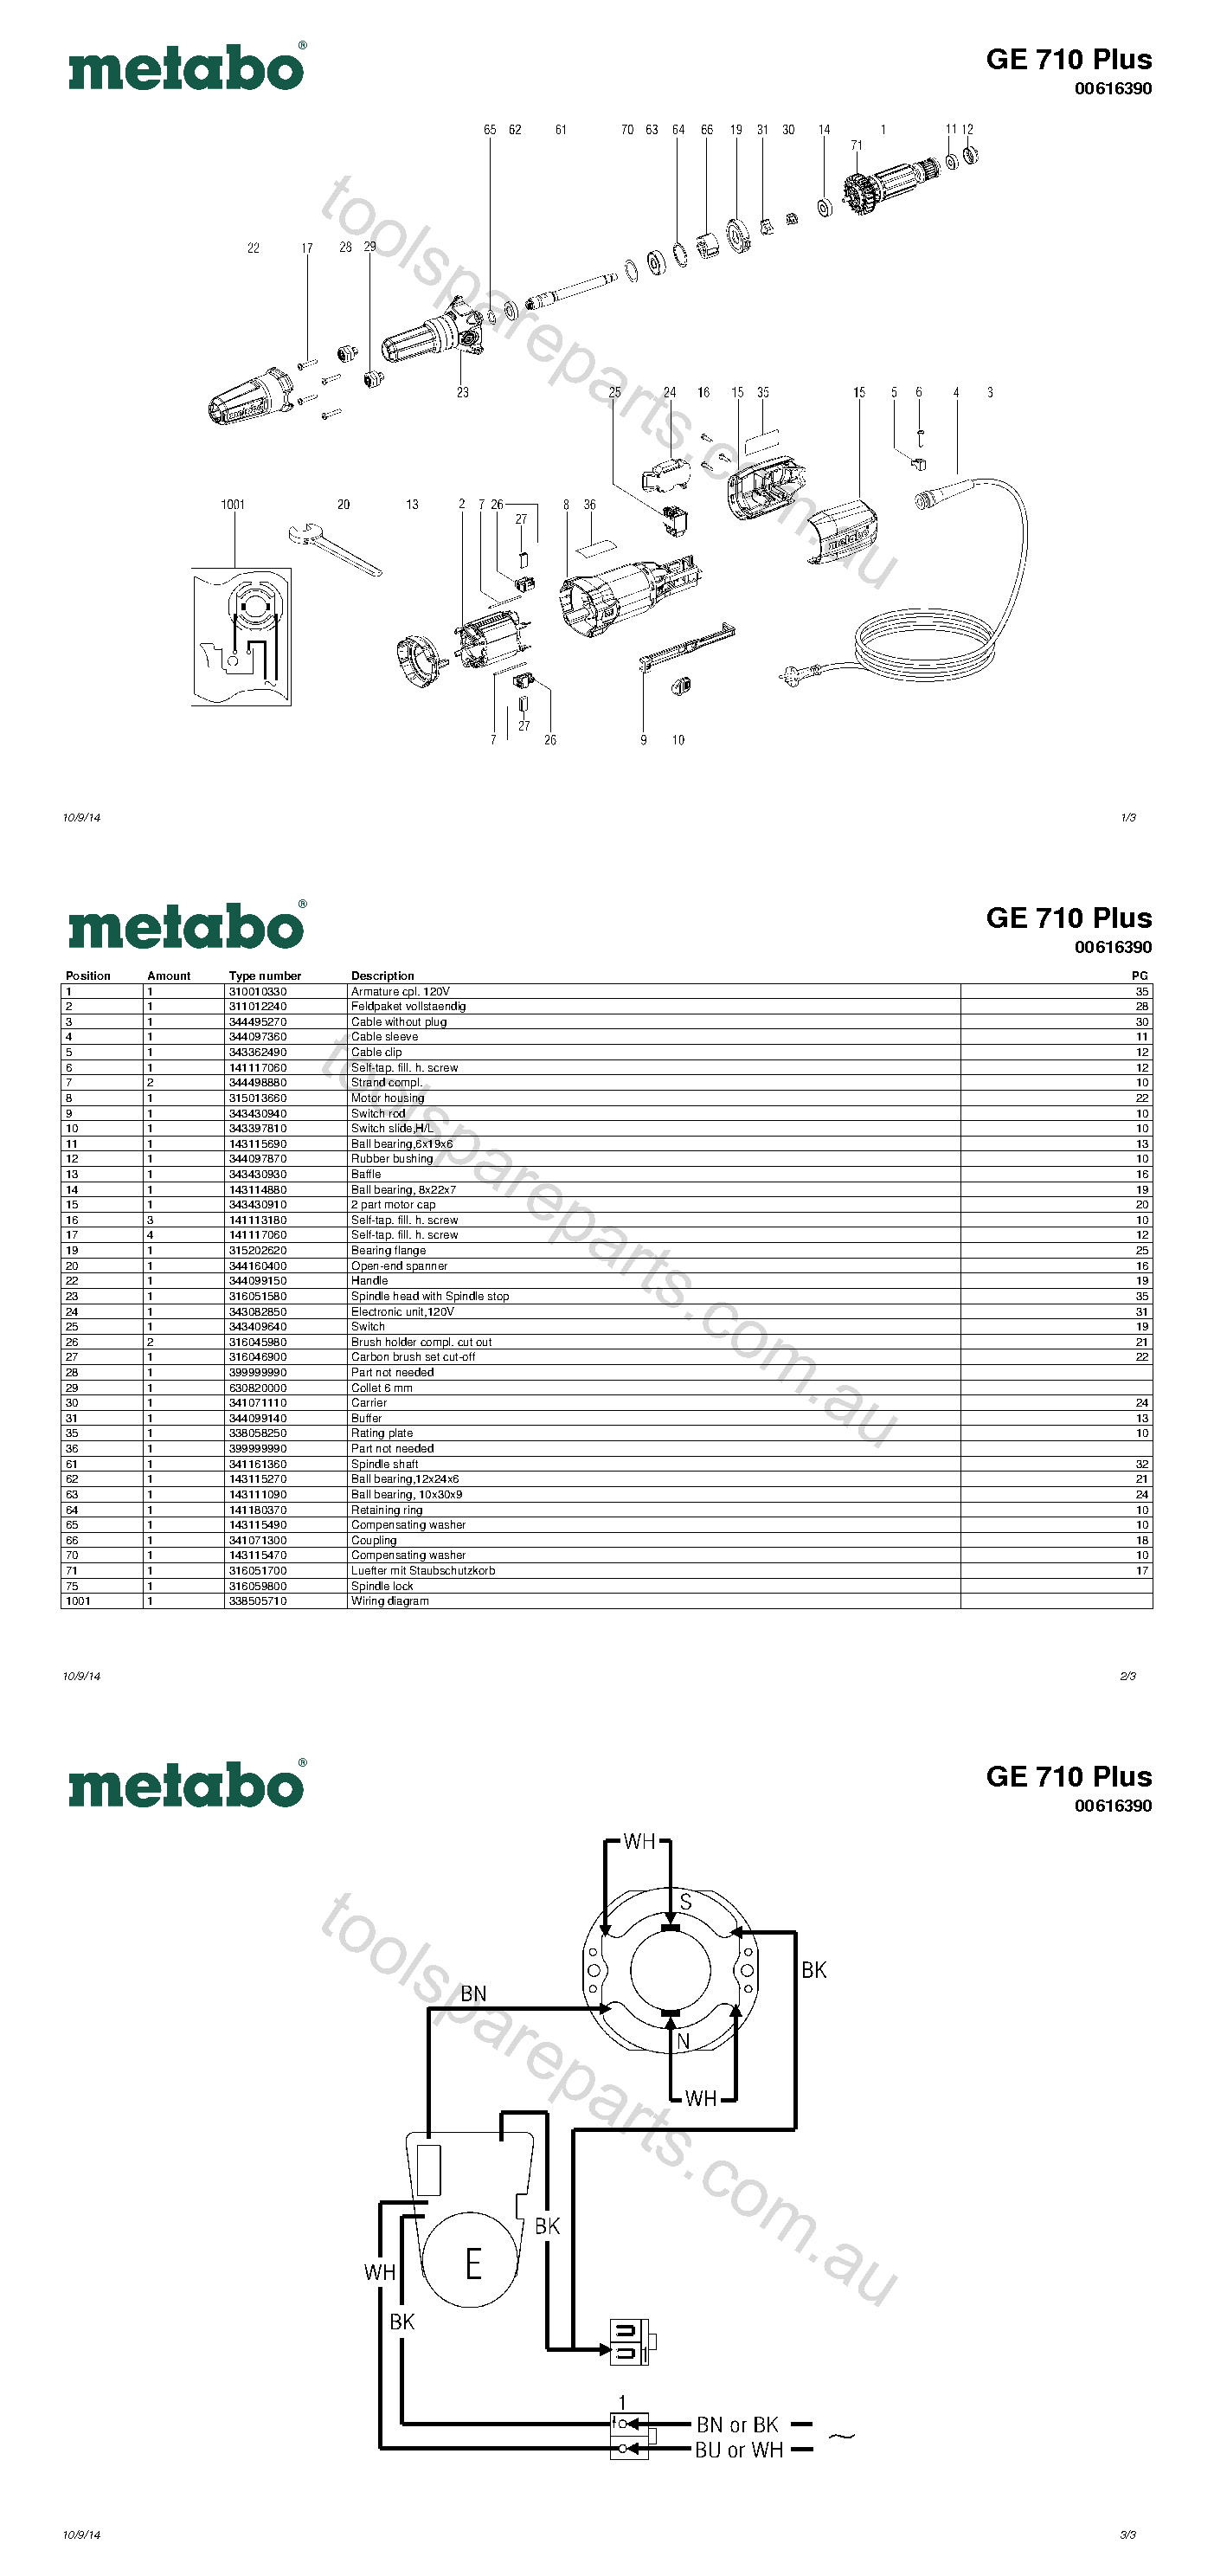 Metabo GE 710 Plus 00616390  Diagram 1